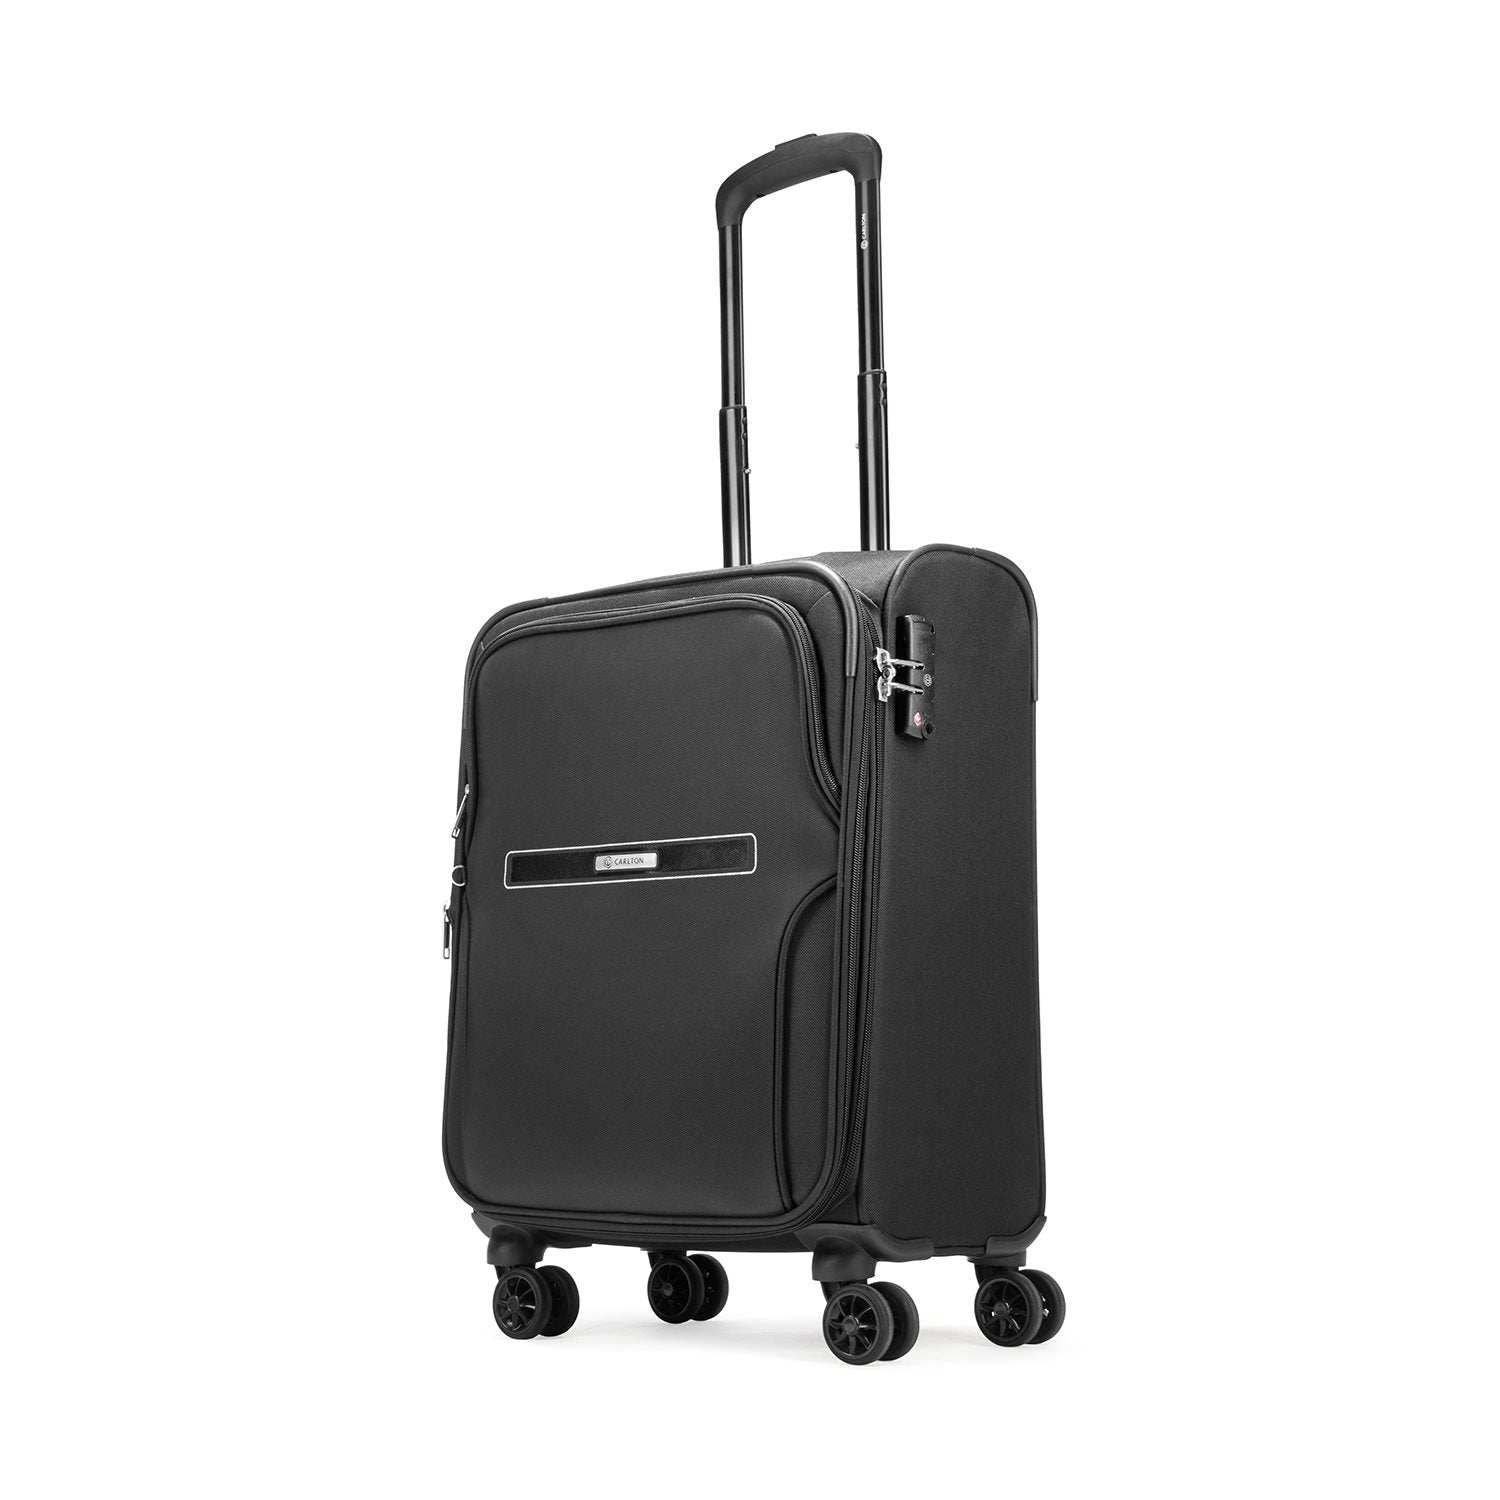 Carlton Turbolite Plus - Handbagage Koffer - 55 cm - Black Handbagage Koffer - Reisartikelen-nl